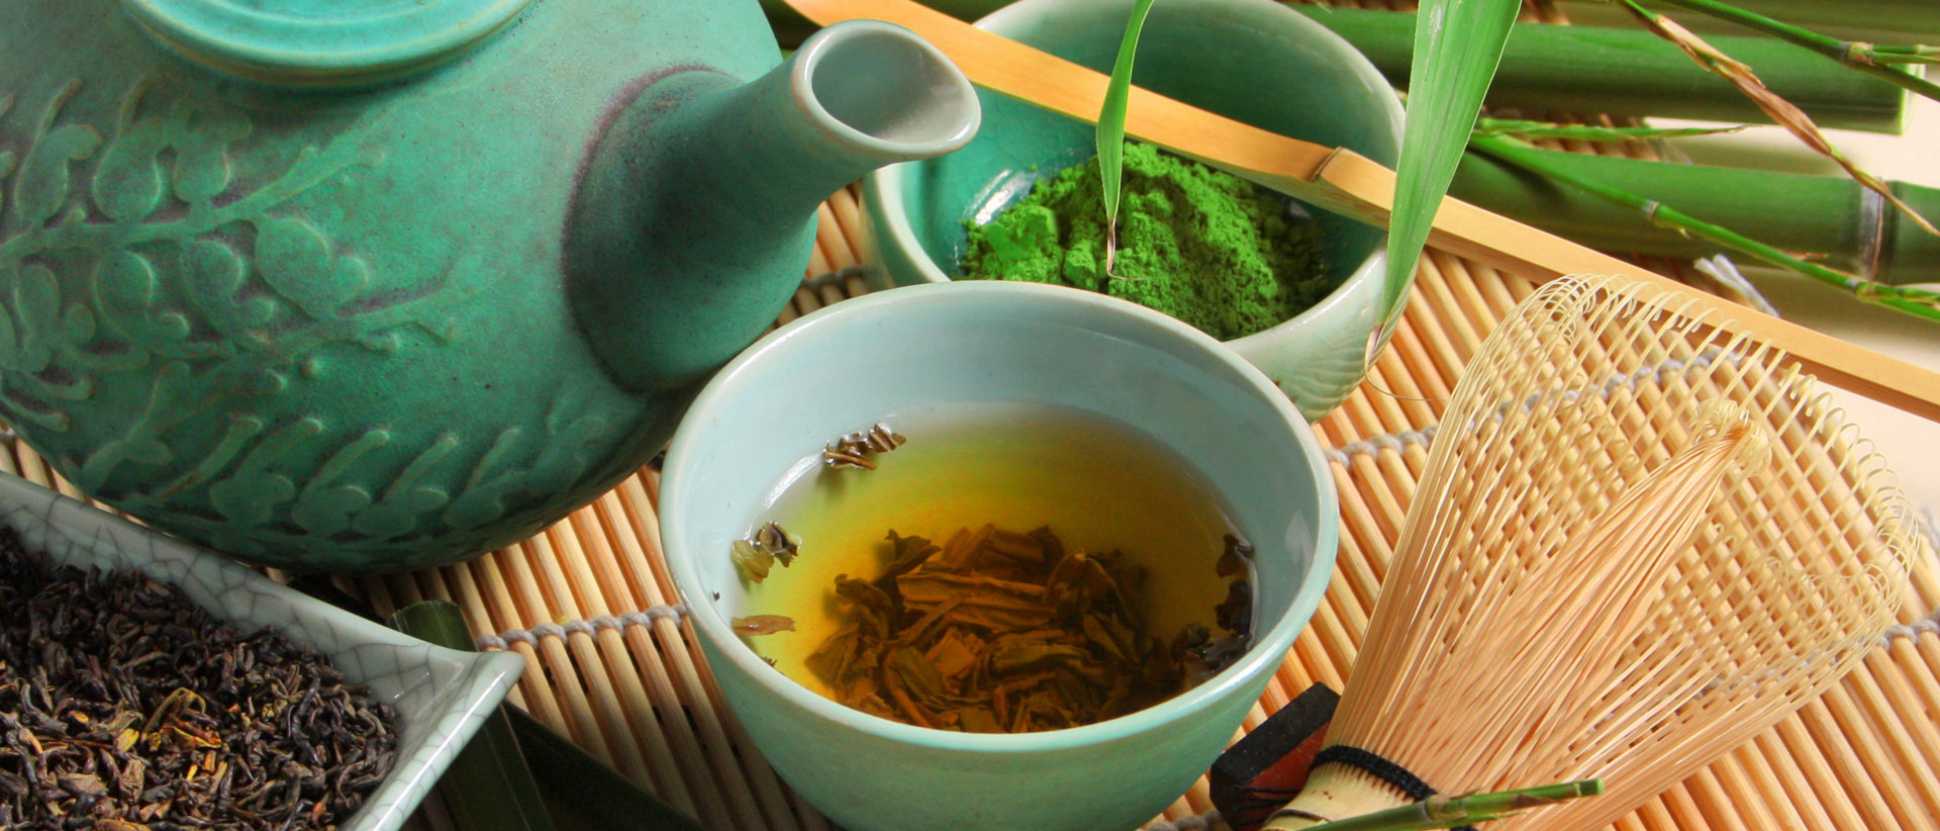 160314-Dietary-iron-cancels-green-teas-anti-inflammatory-effectsjpg